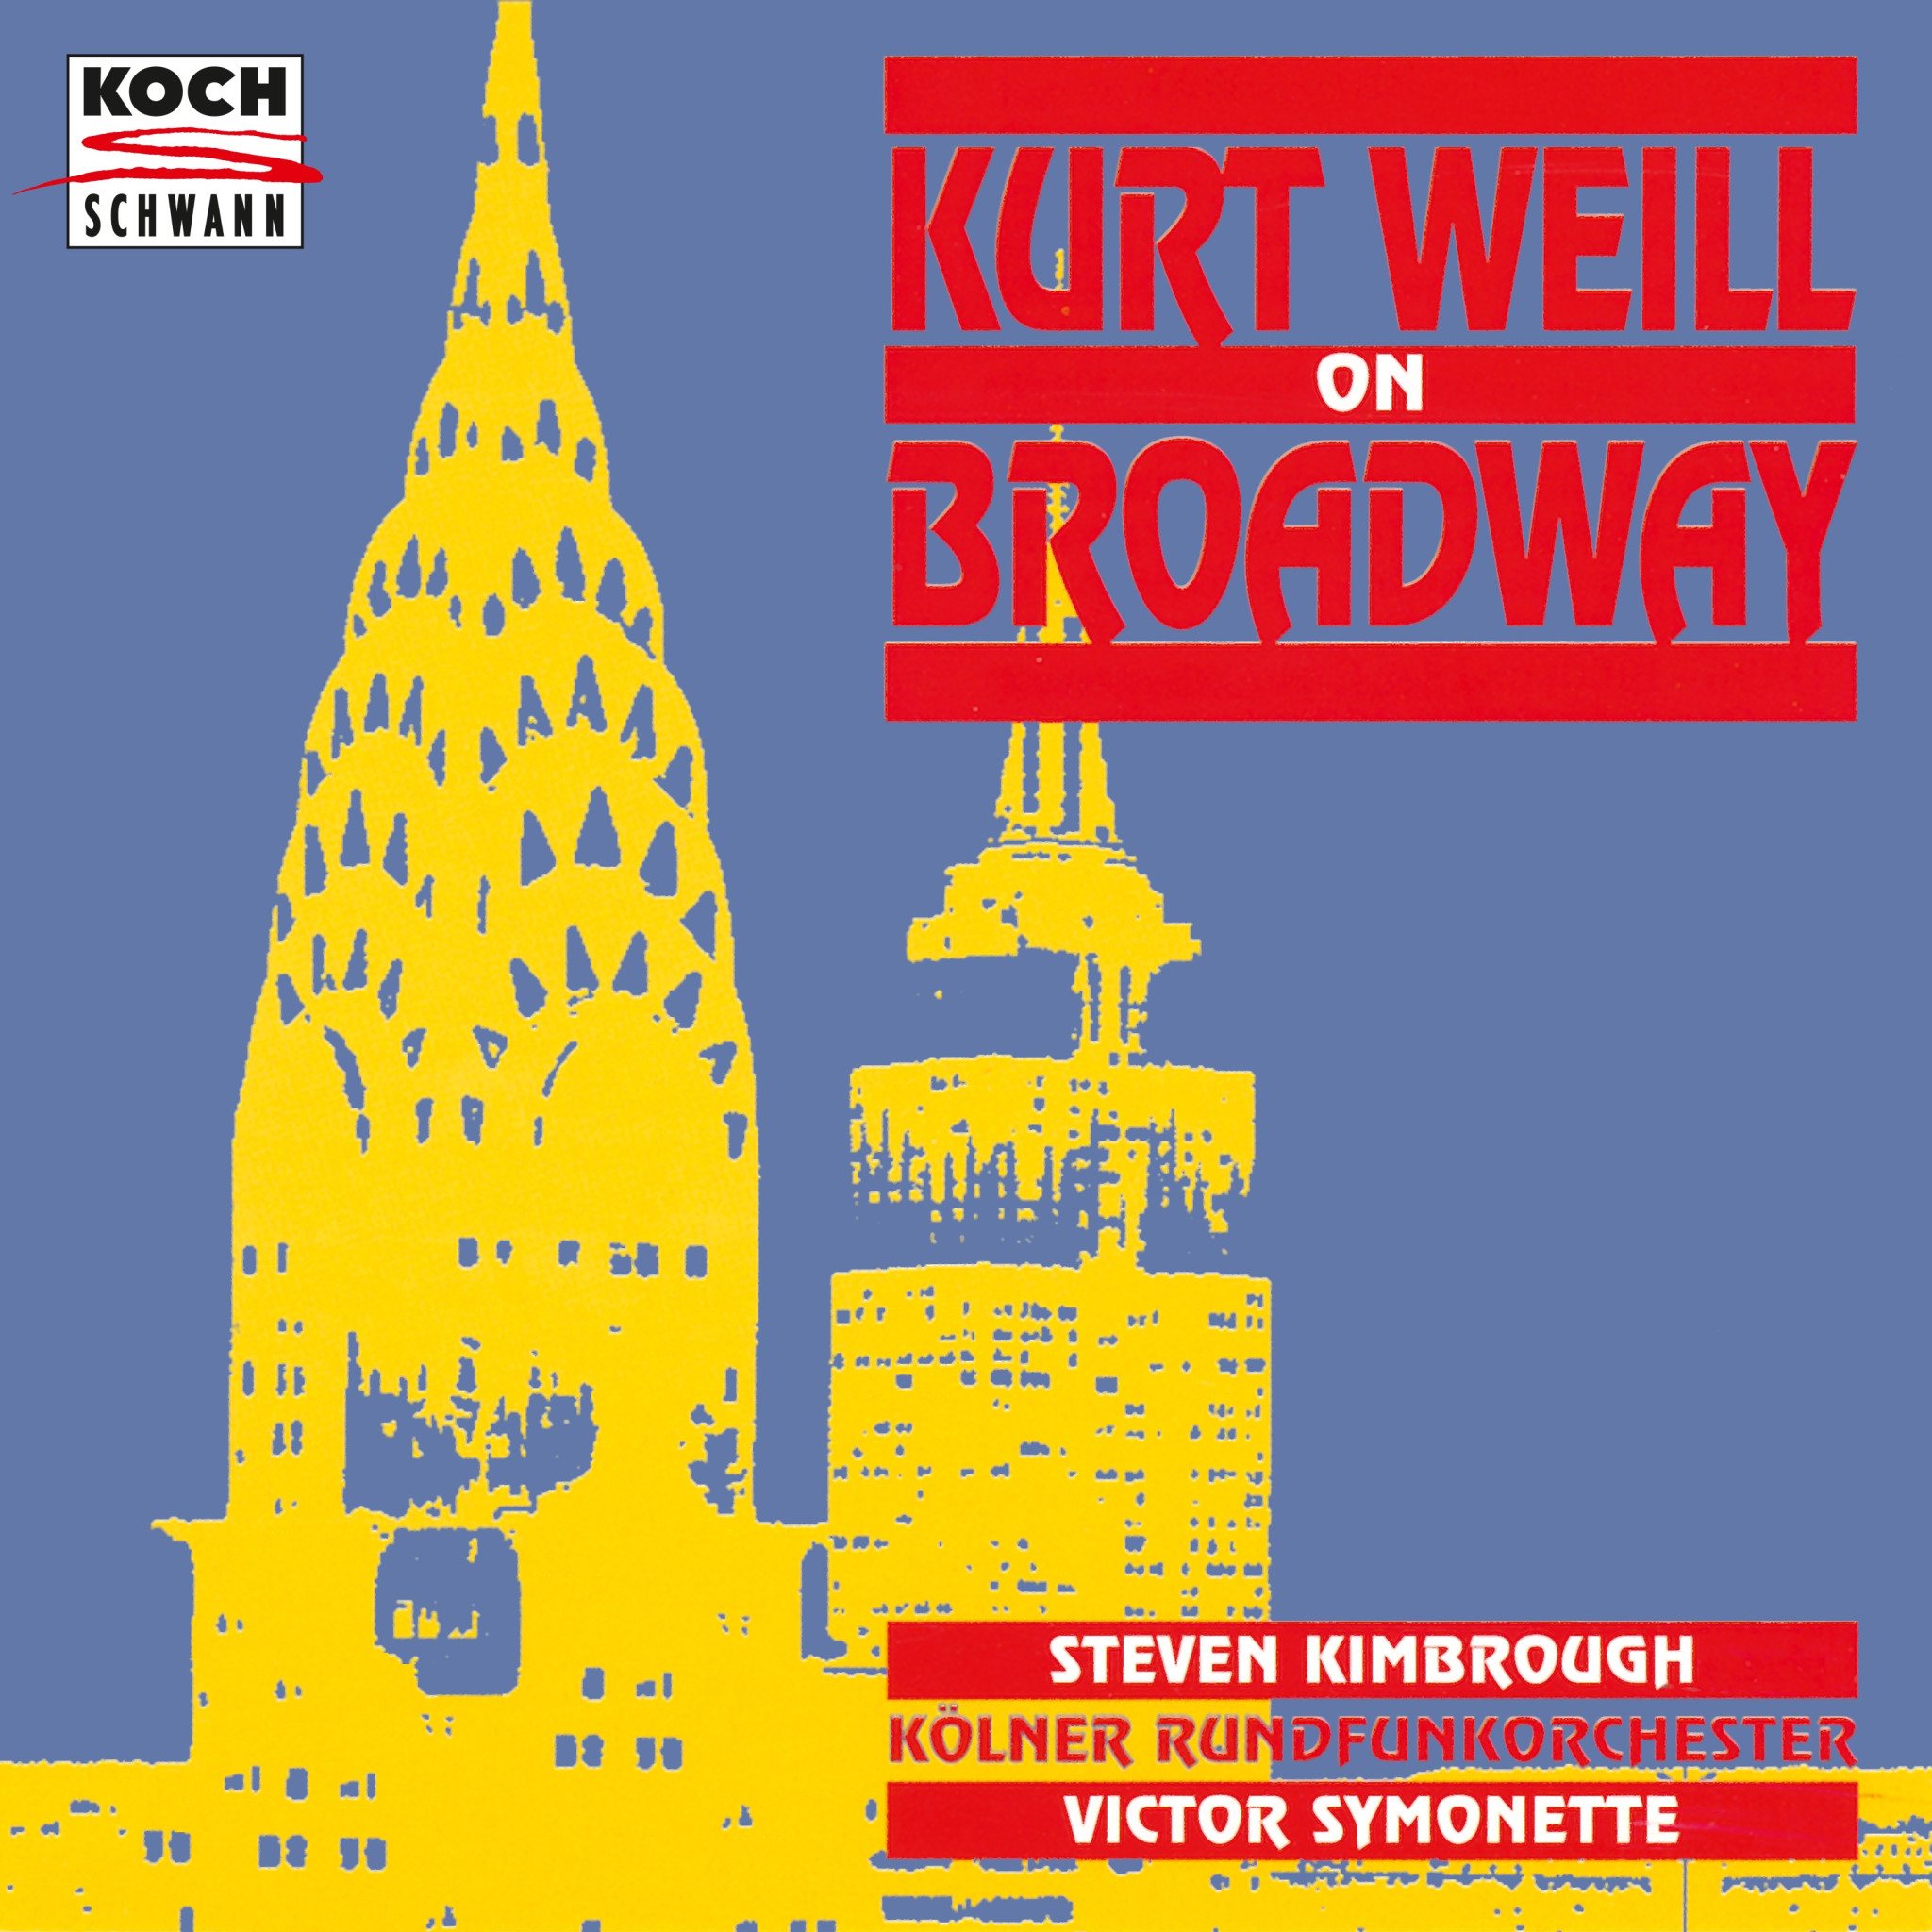  Kurt Weill on Broadway